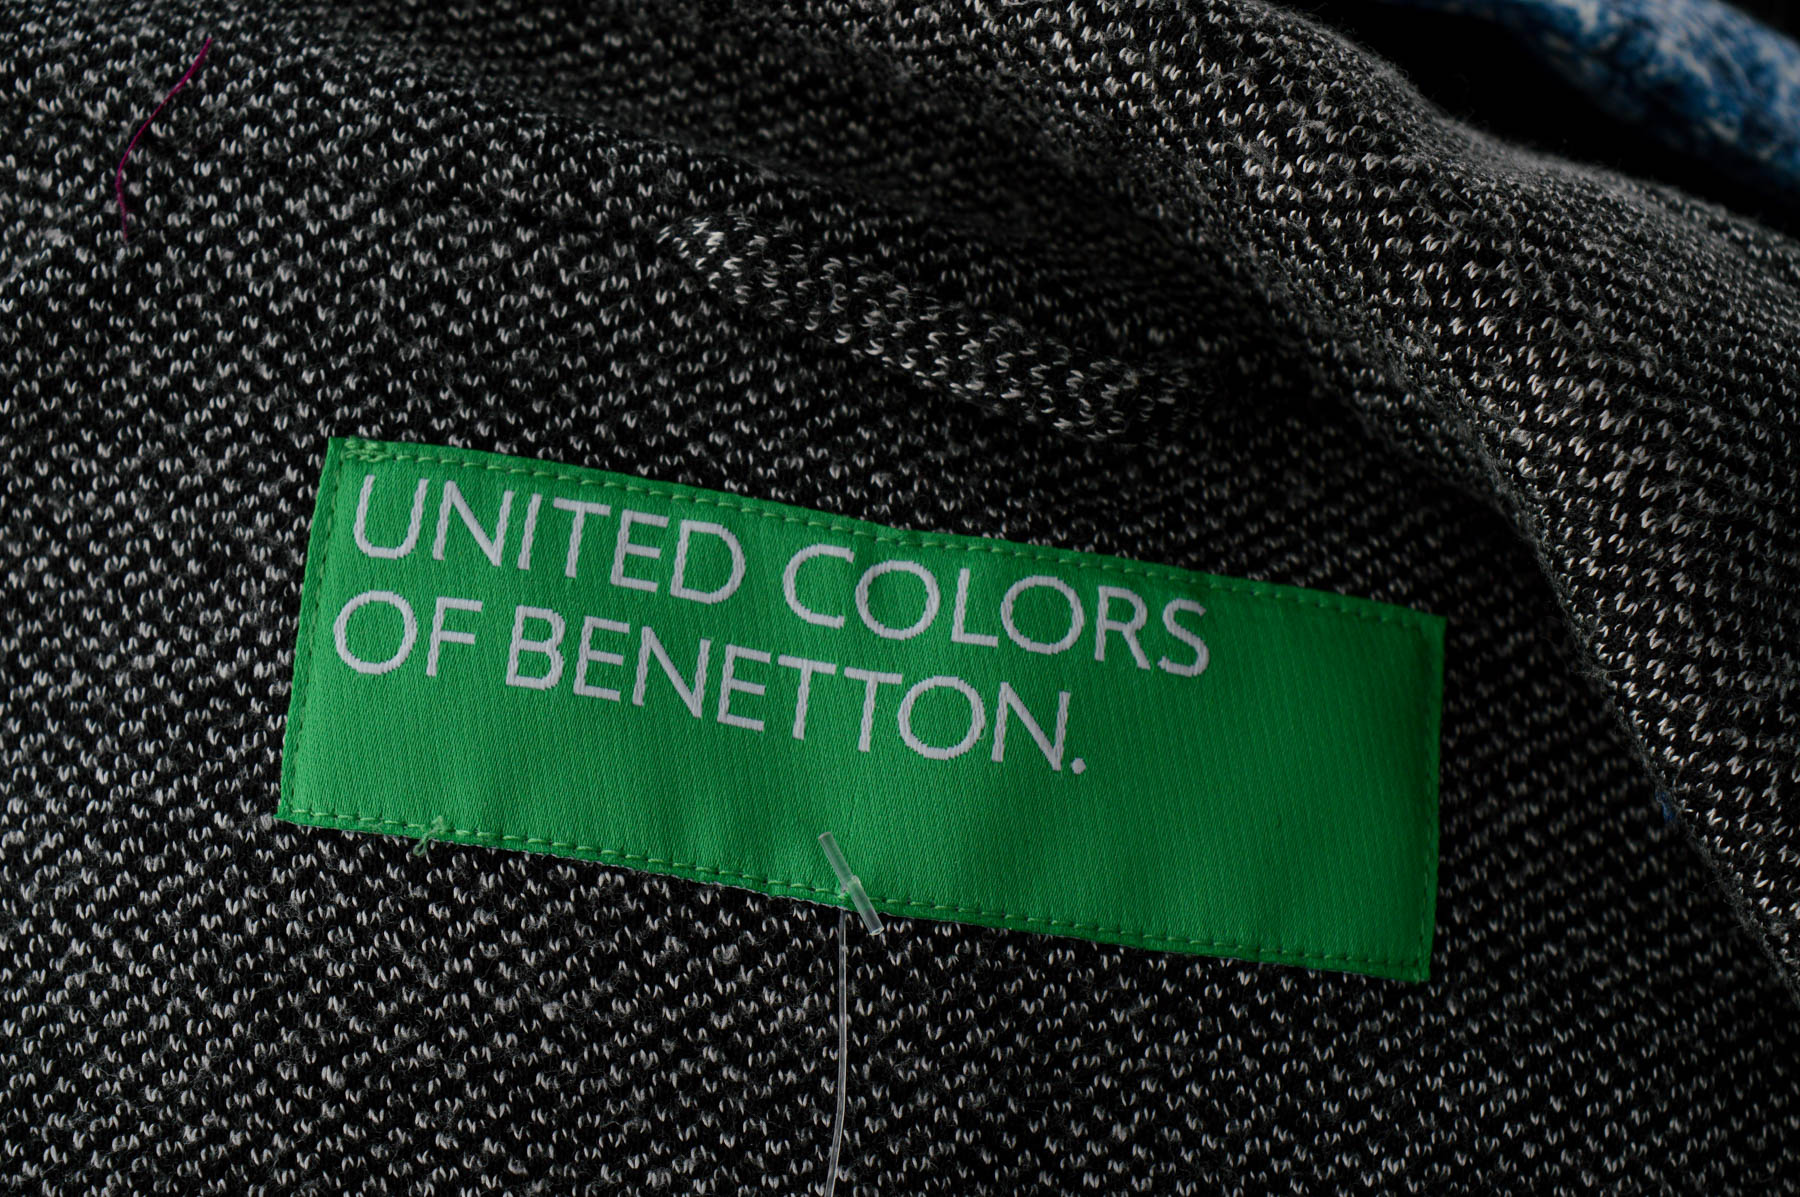 Women's blazer - United Colors of Benetton - 2